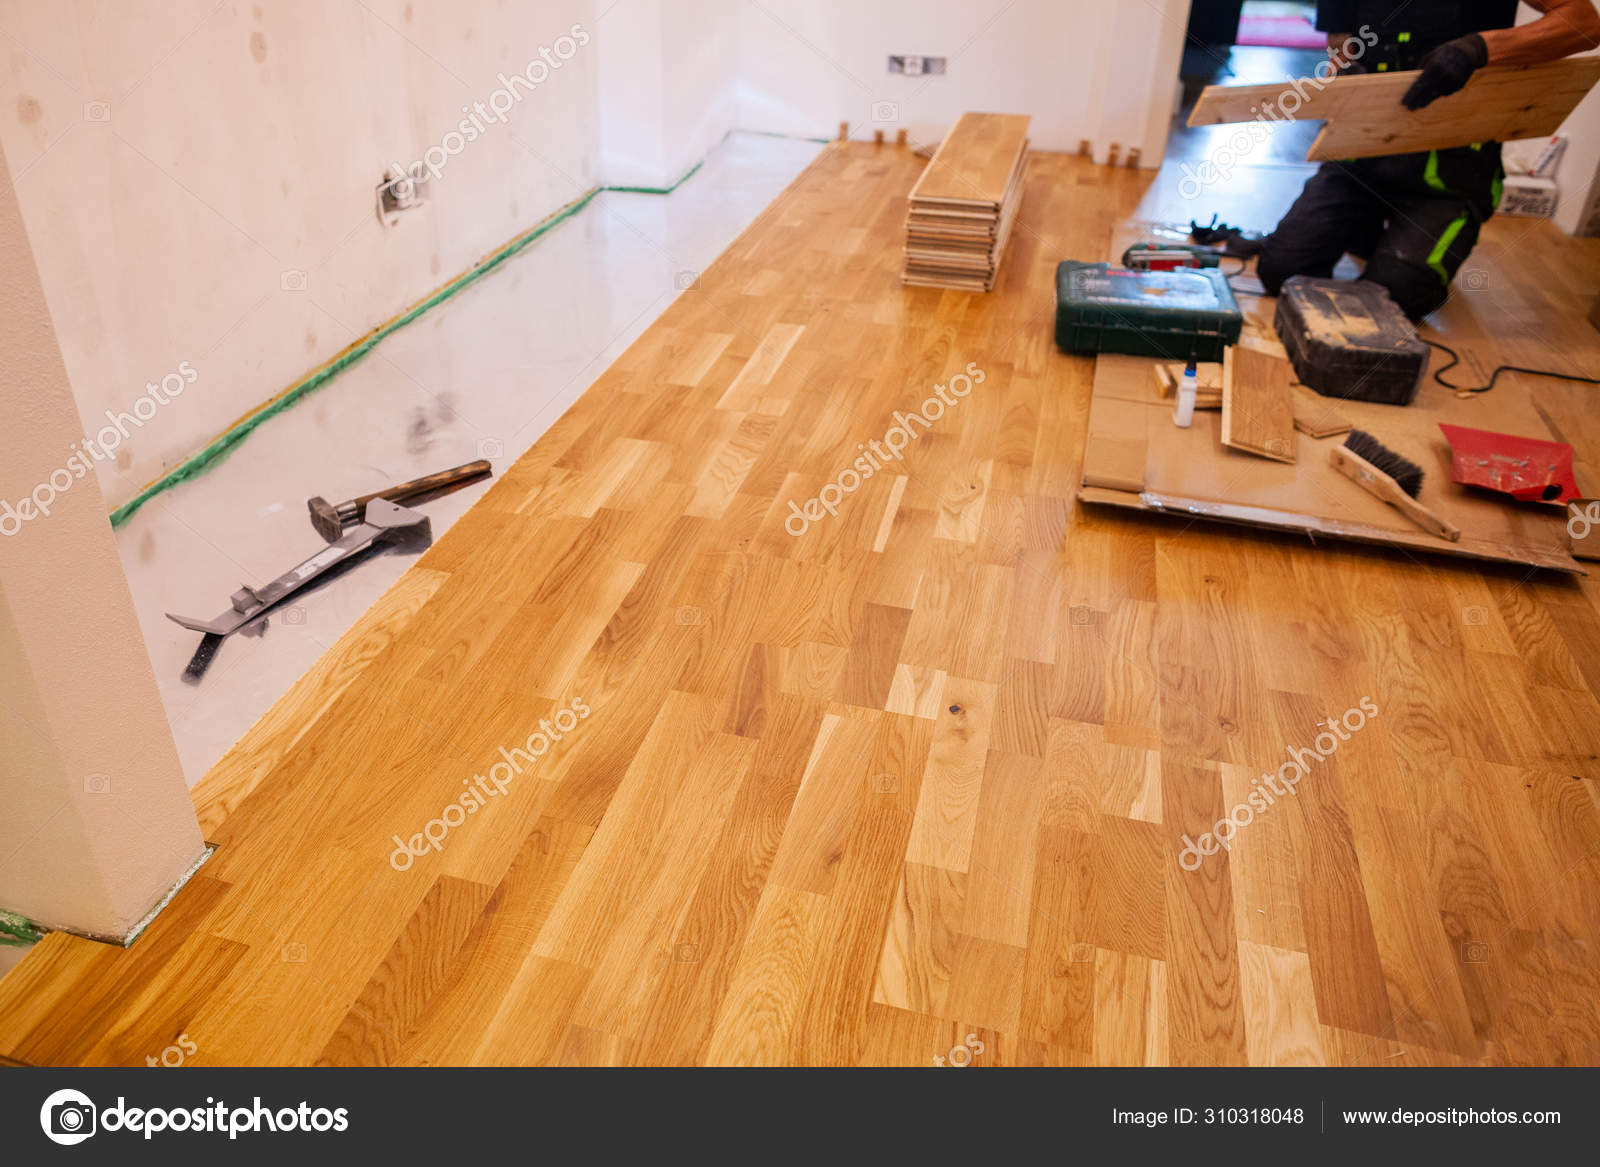 Installing Parquet Floor House Room Stock Photo